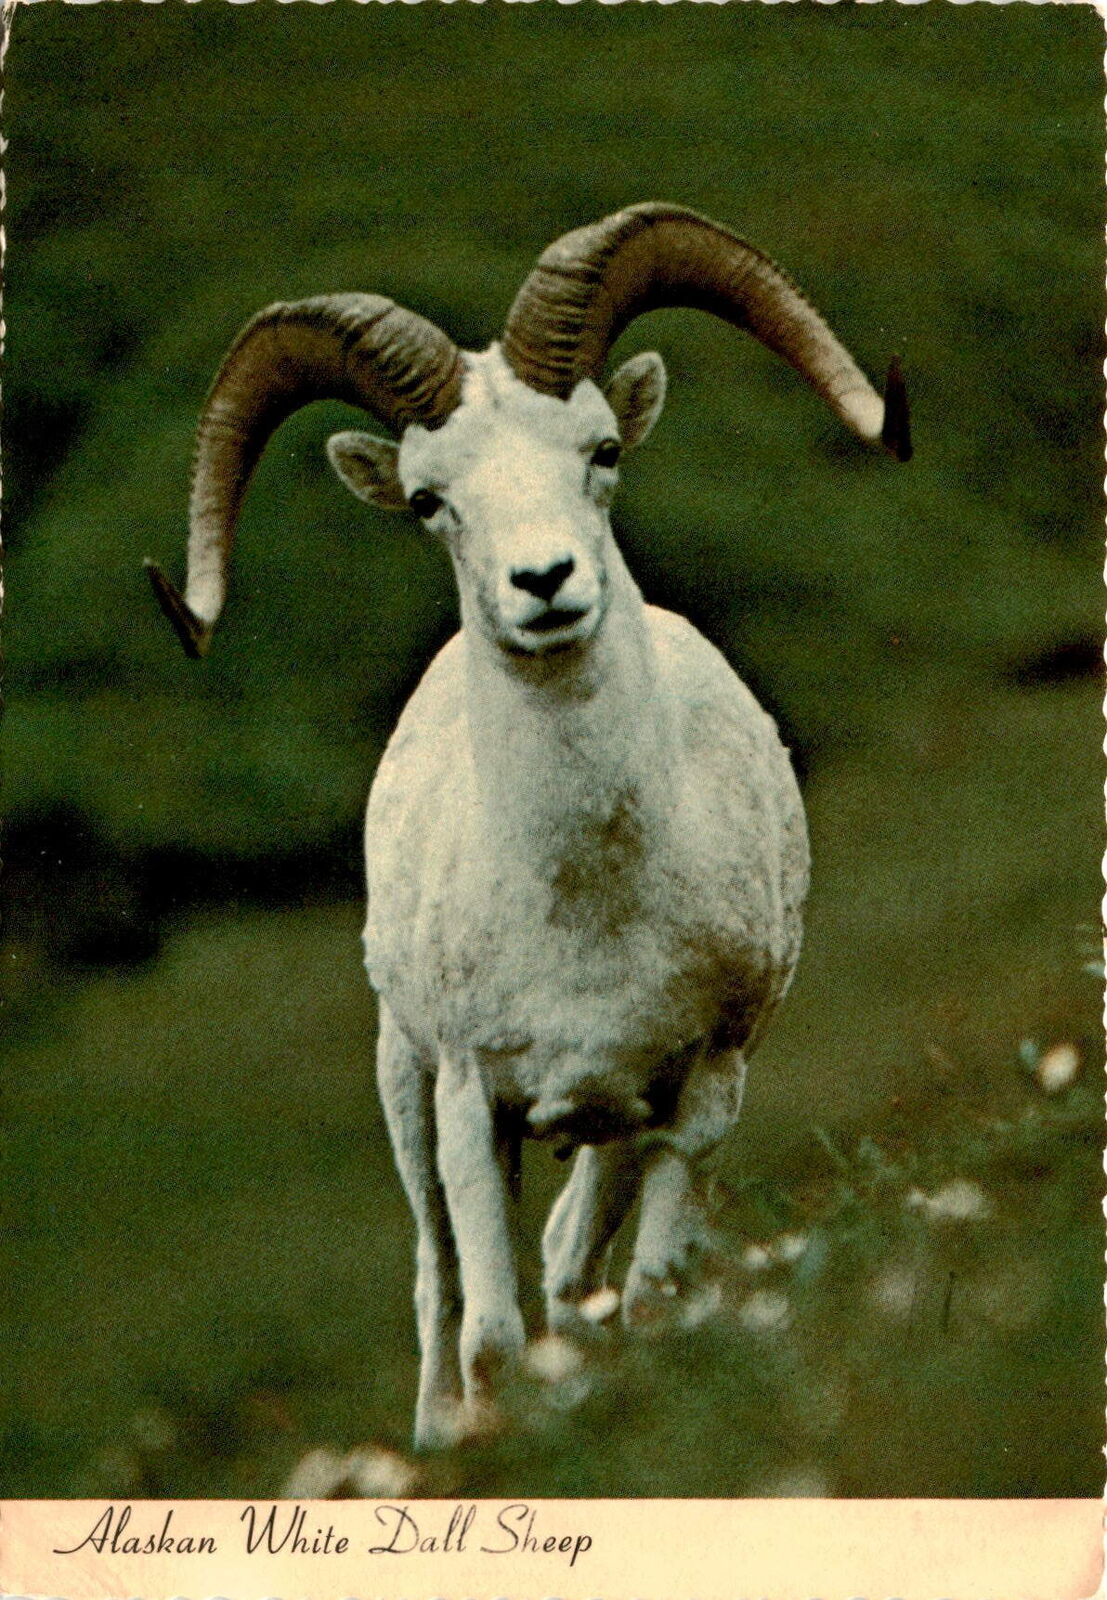 Alaskan White Dall Sheep, Alaska Joe, moose, Mrs. Ray Hull, Waus Postcard